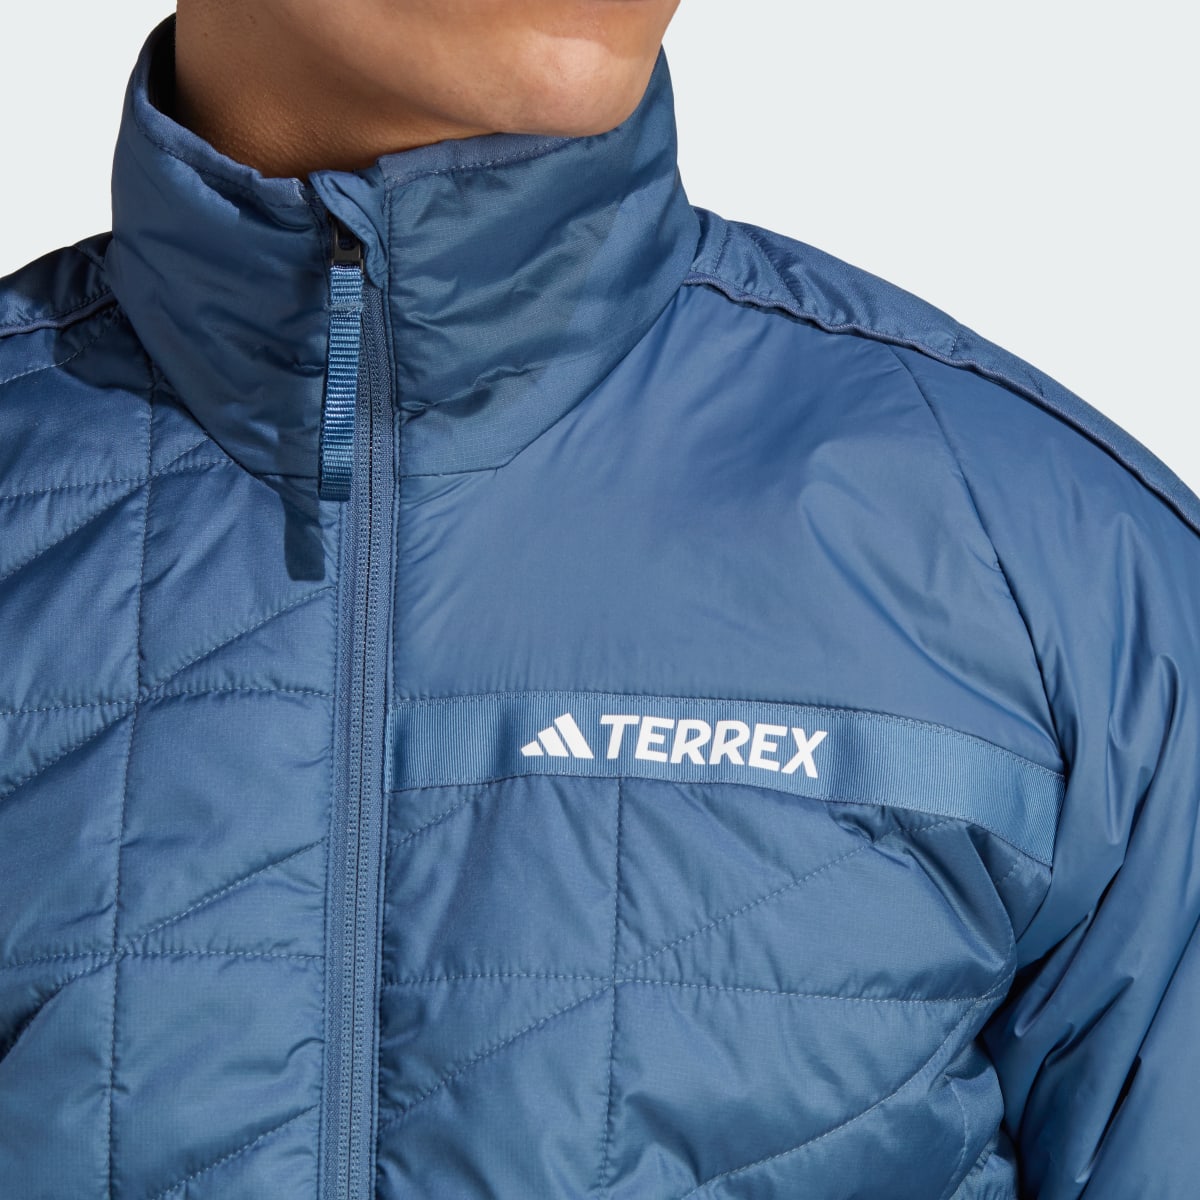 Adidas Terrex Multi Insulation Jacket. 7